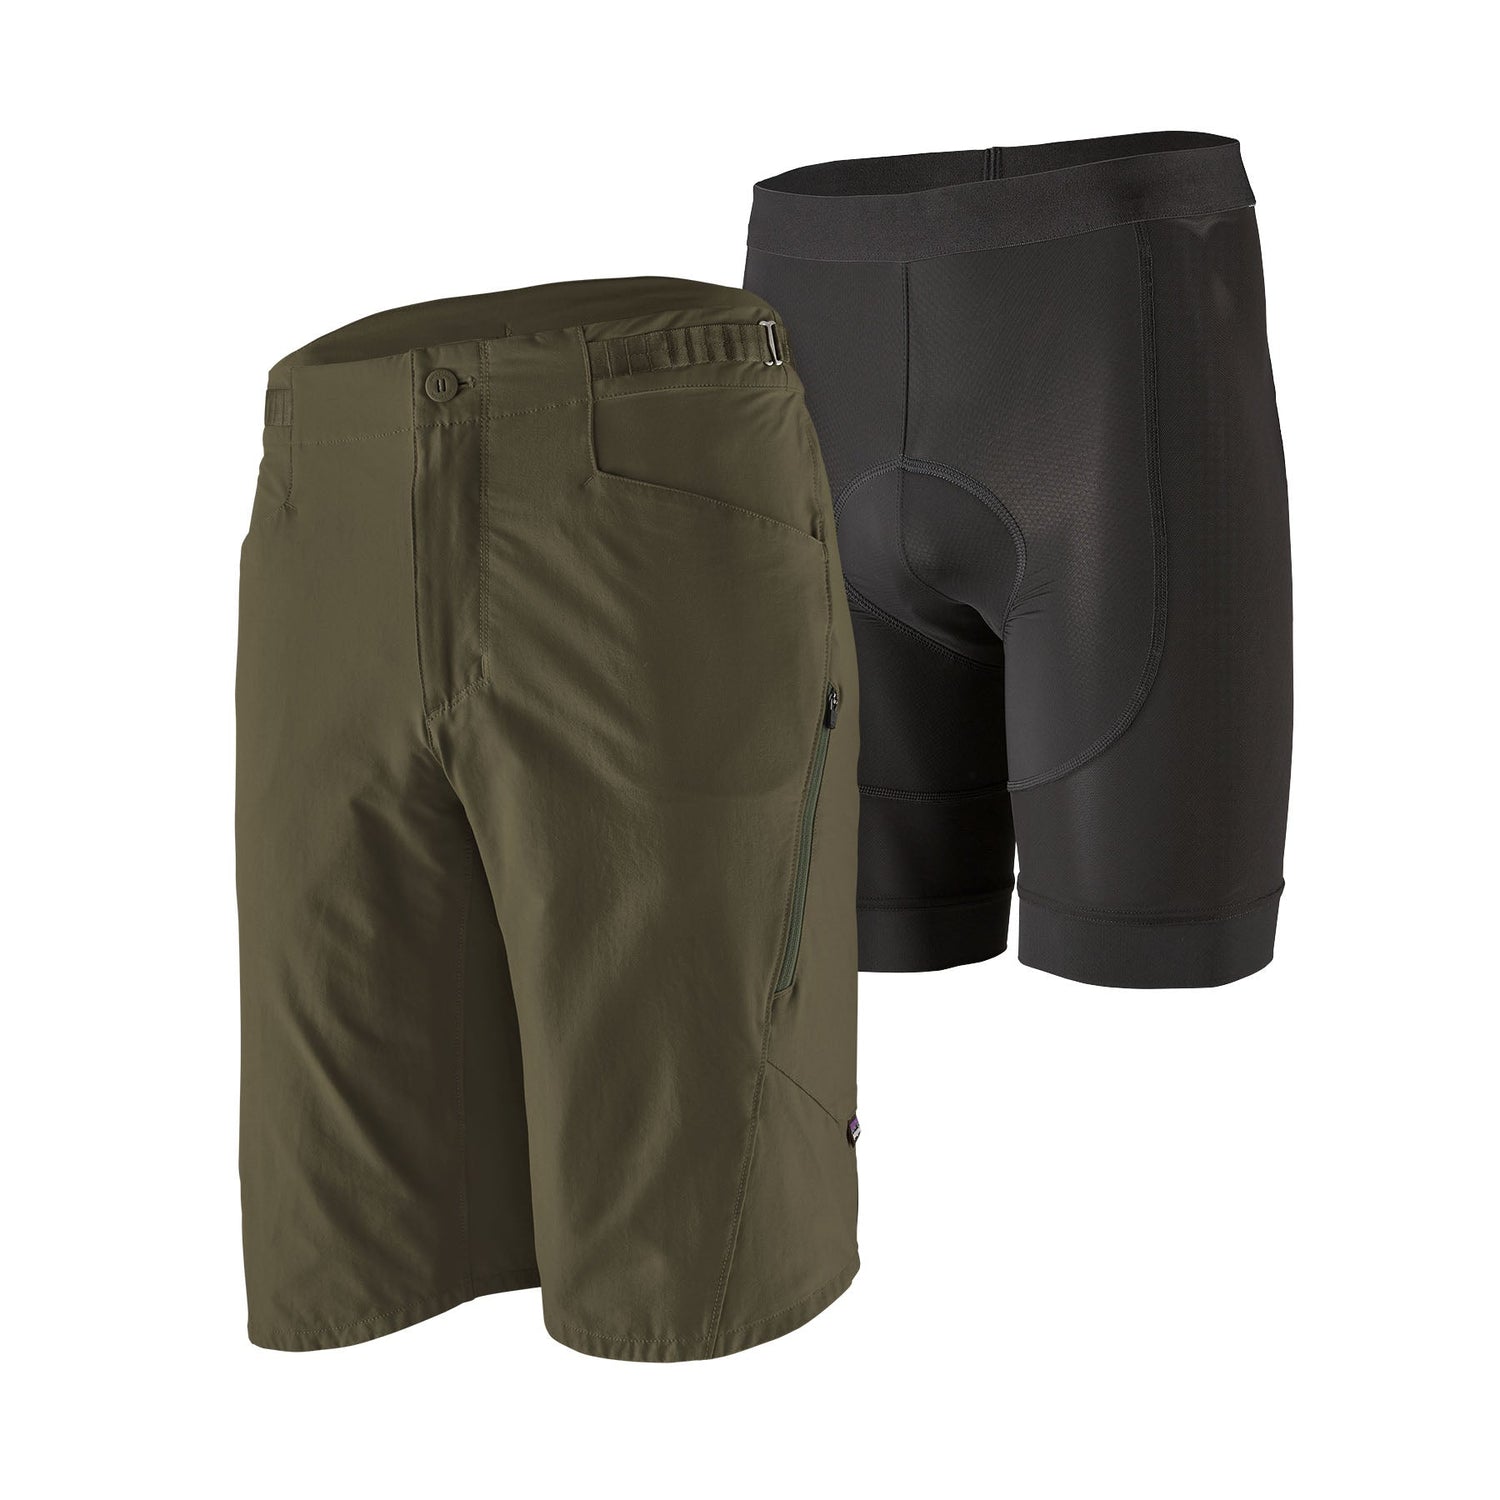 Patagonia M's Dirt Craft Bike Shorts - Recycled nylon Basin Green Pants